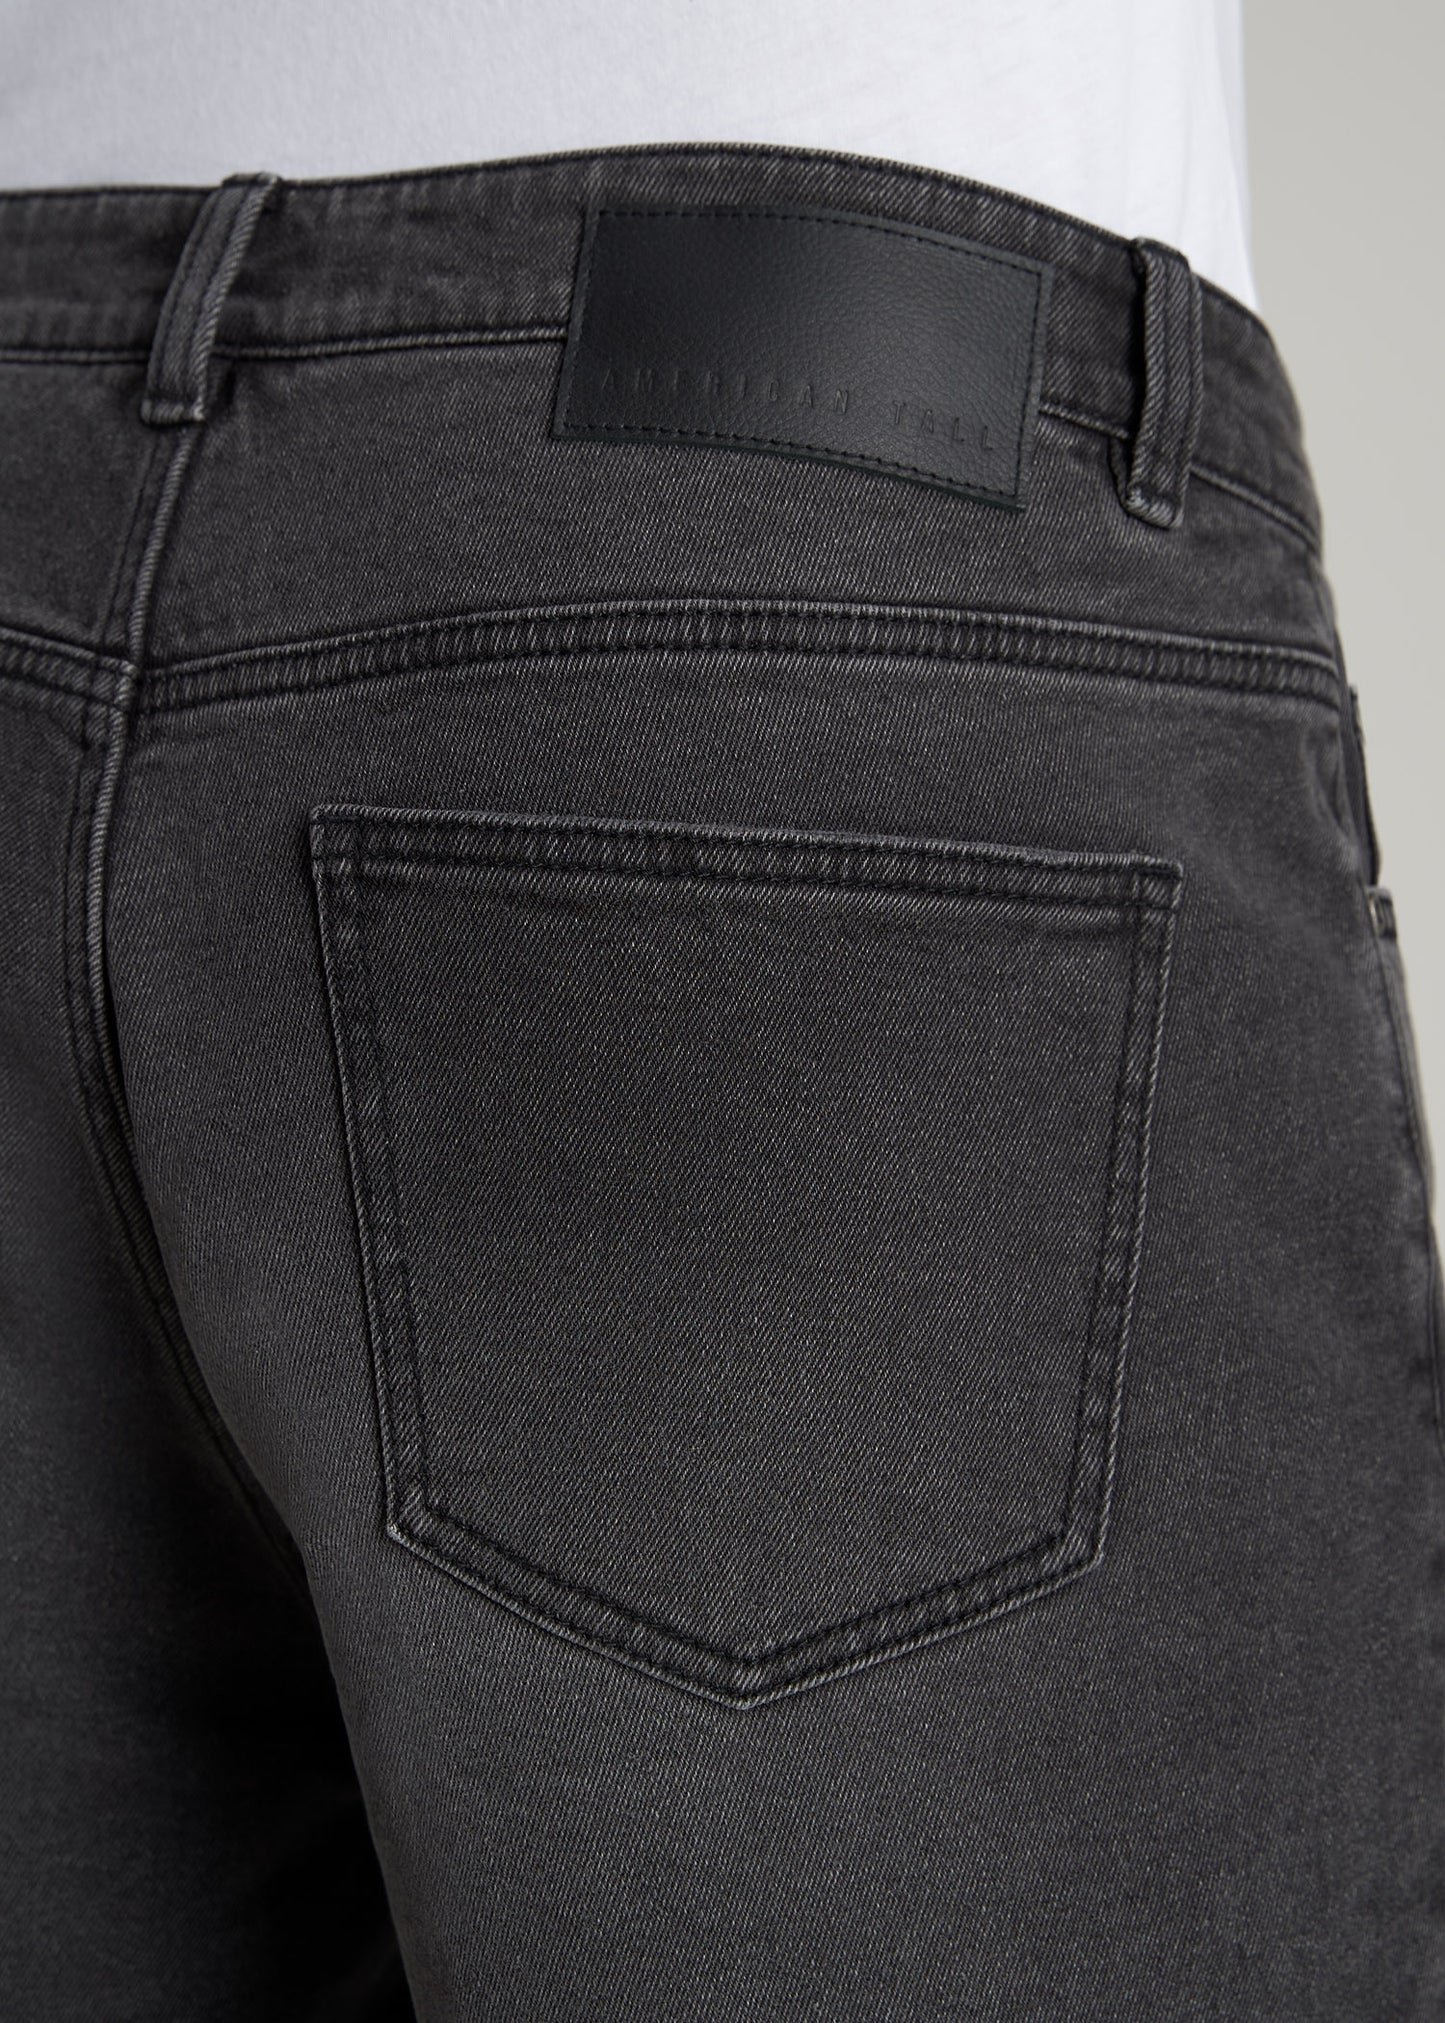     American-Tall-Men-Denim-Shorts-Vintage-Faded-Black-detail